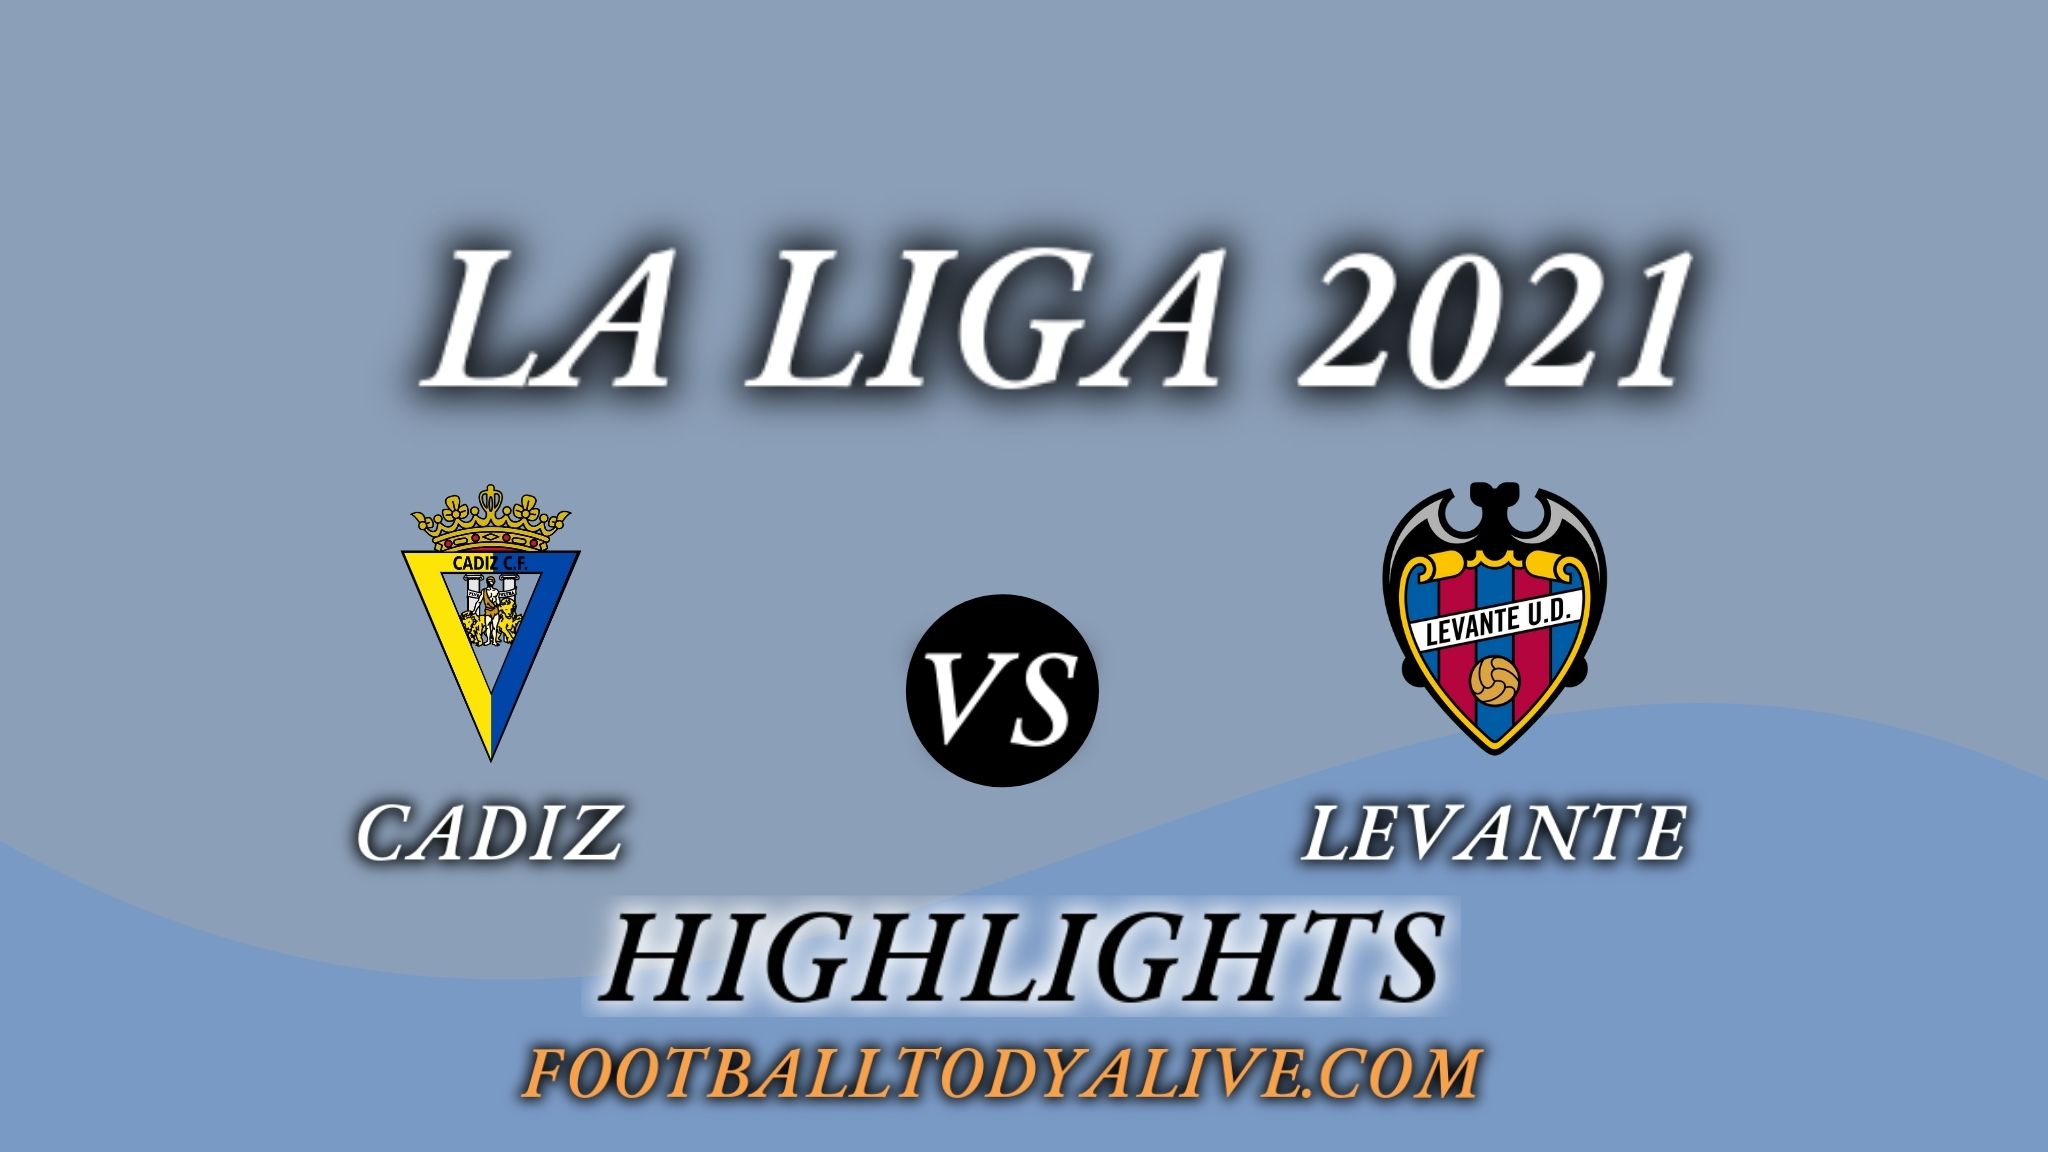 Cadiz Vs Levante Highlights 2021